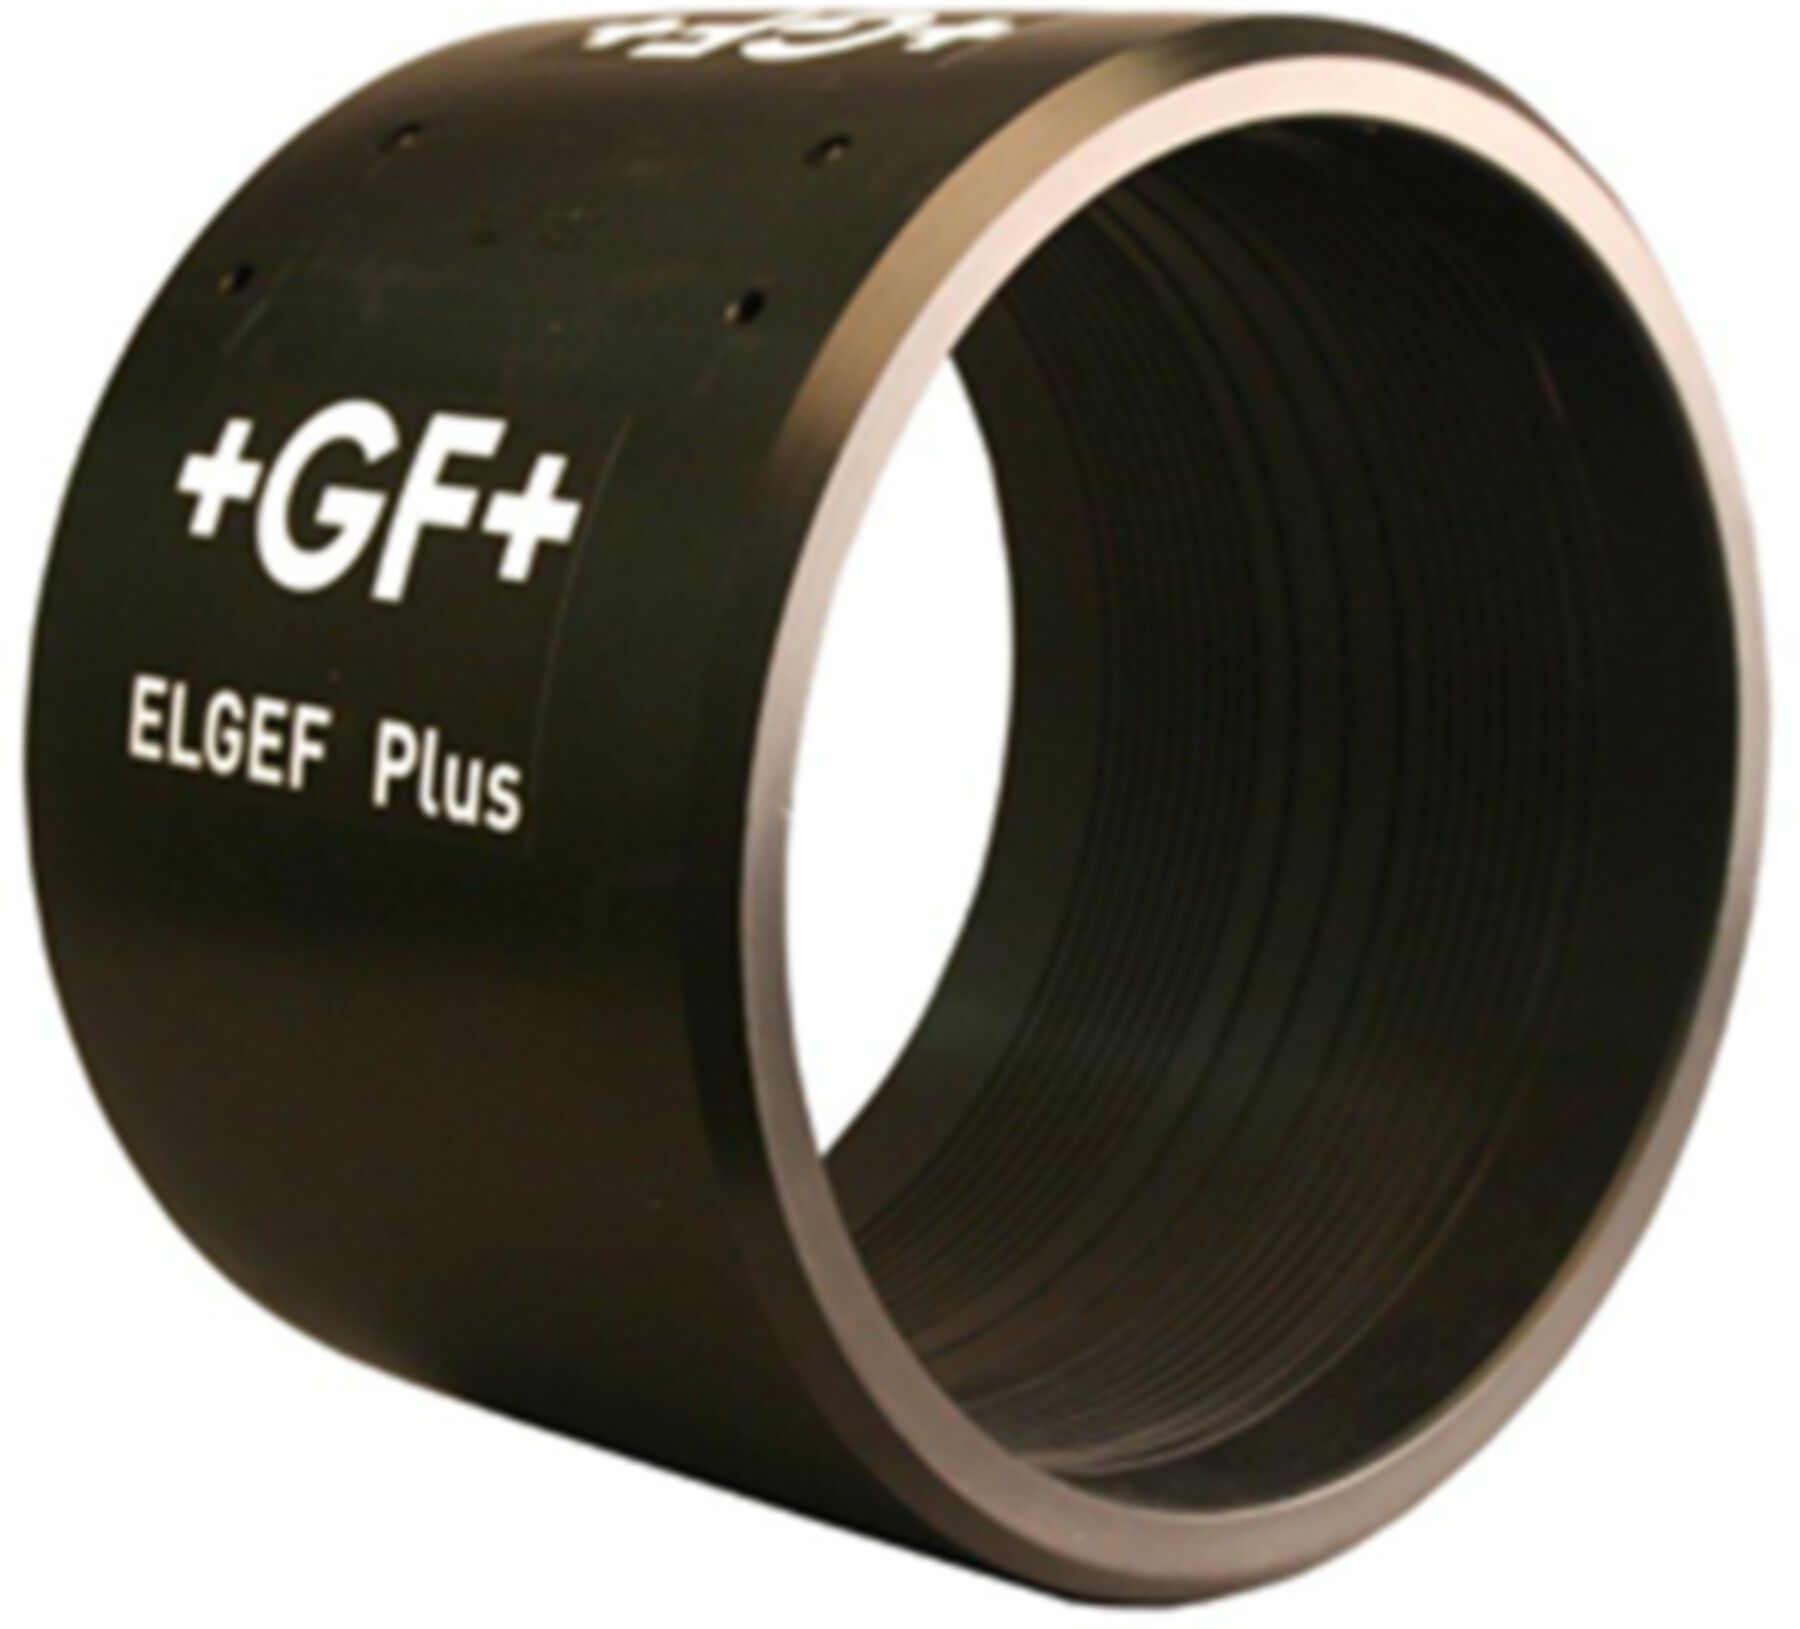 ELGEF Muffe PN 16 d 280mm 753 911 622 - ELGEF Plus Elektroschweissfittinge